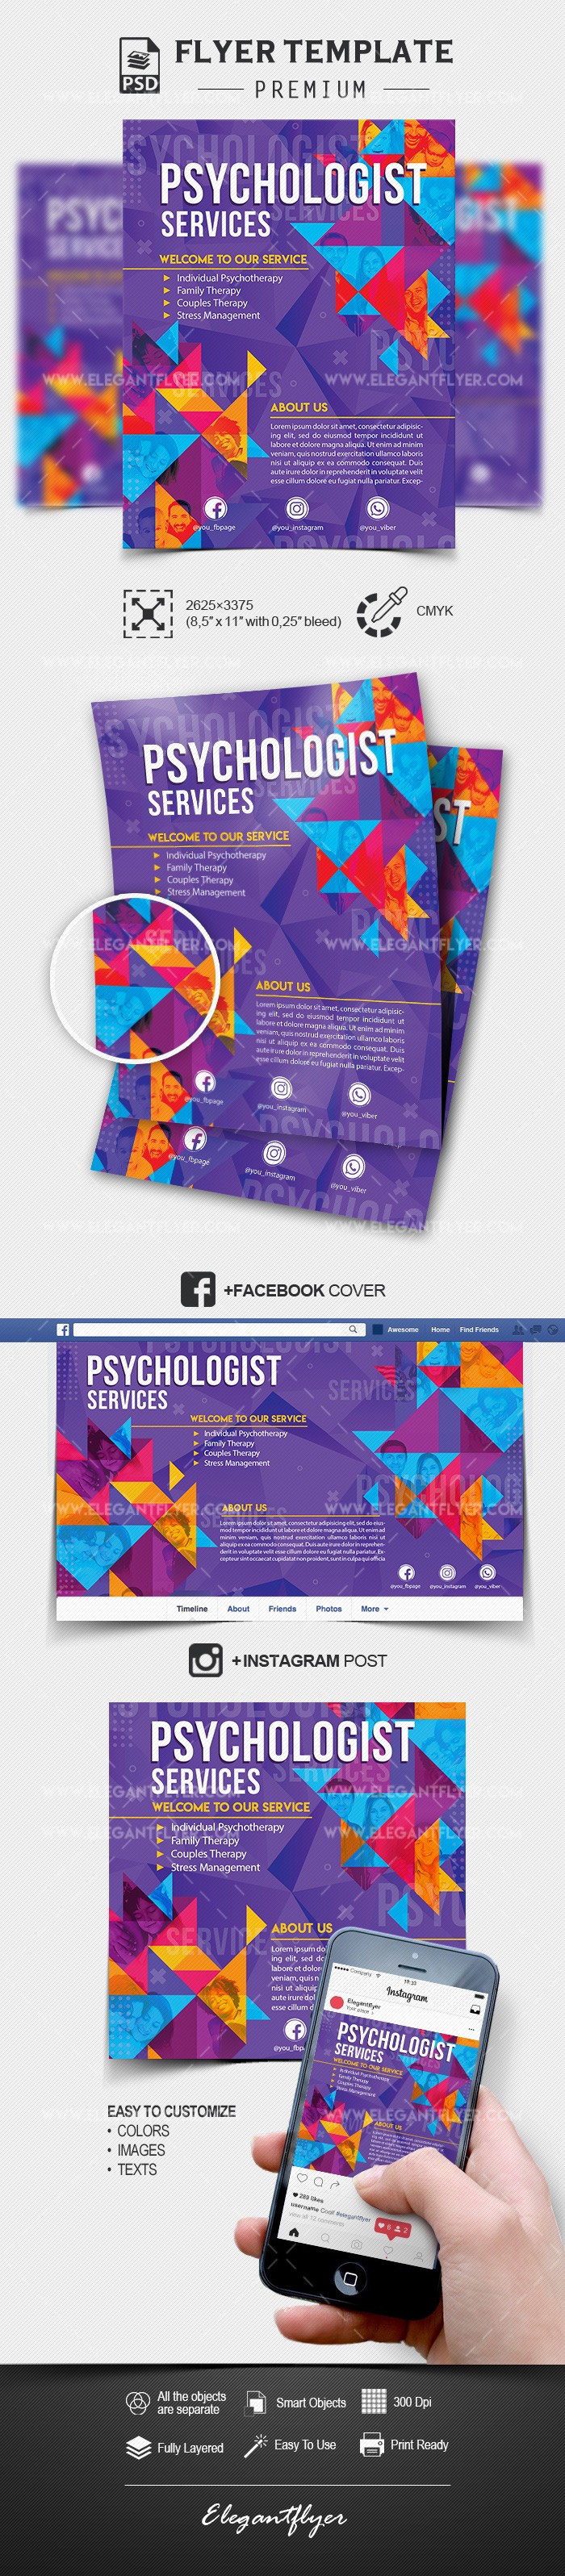 Psychologist Services by ElegantFlyer